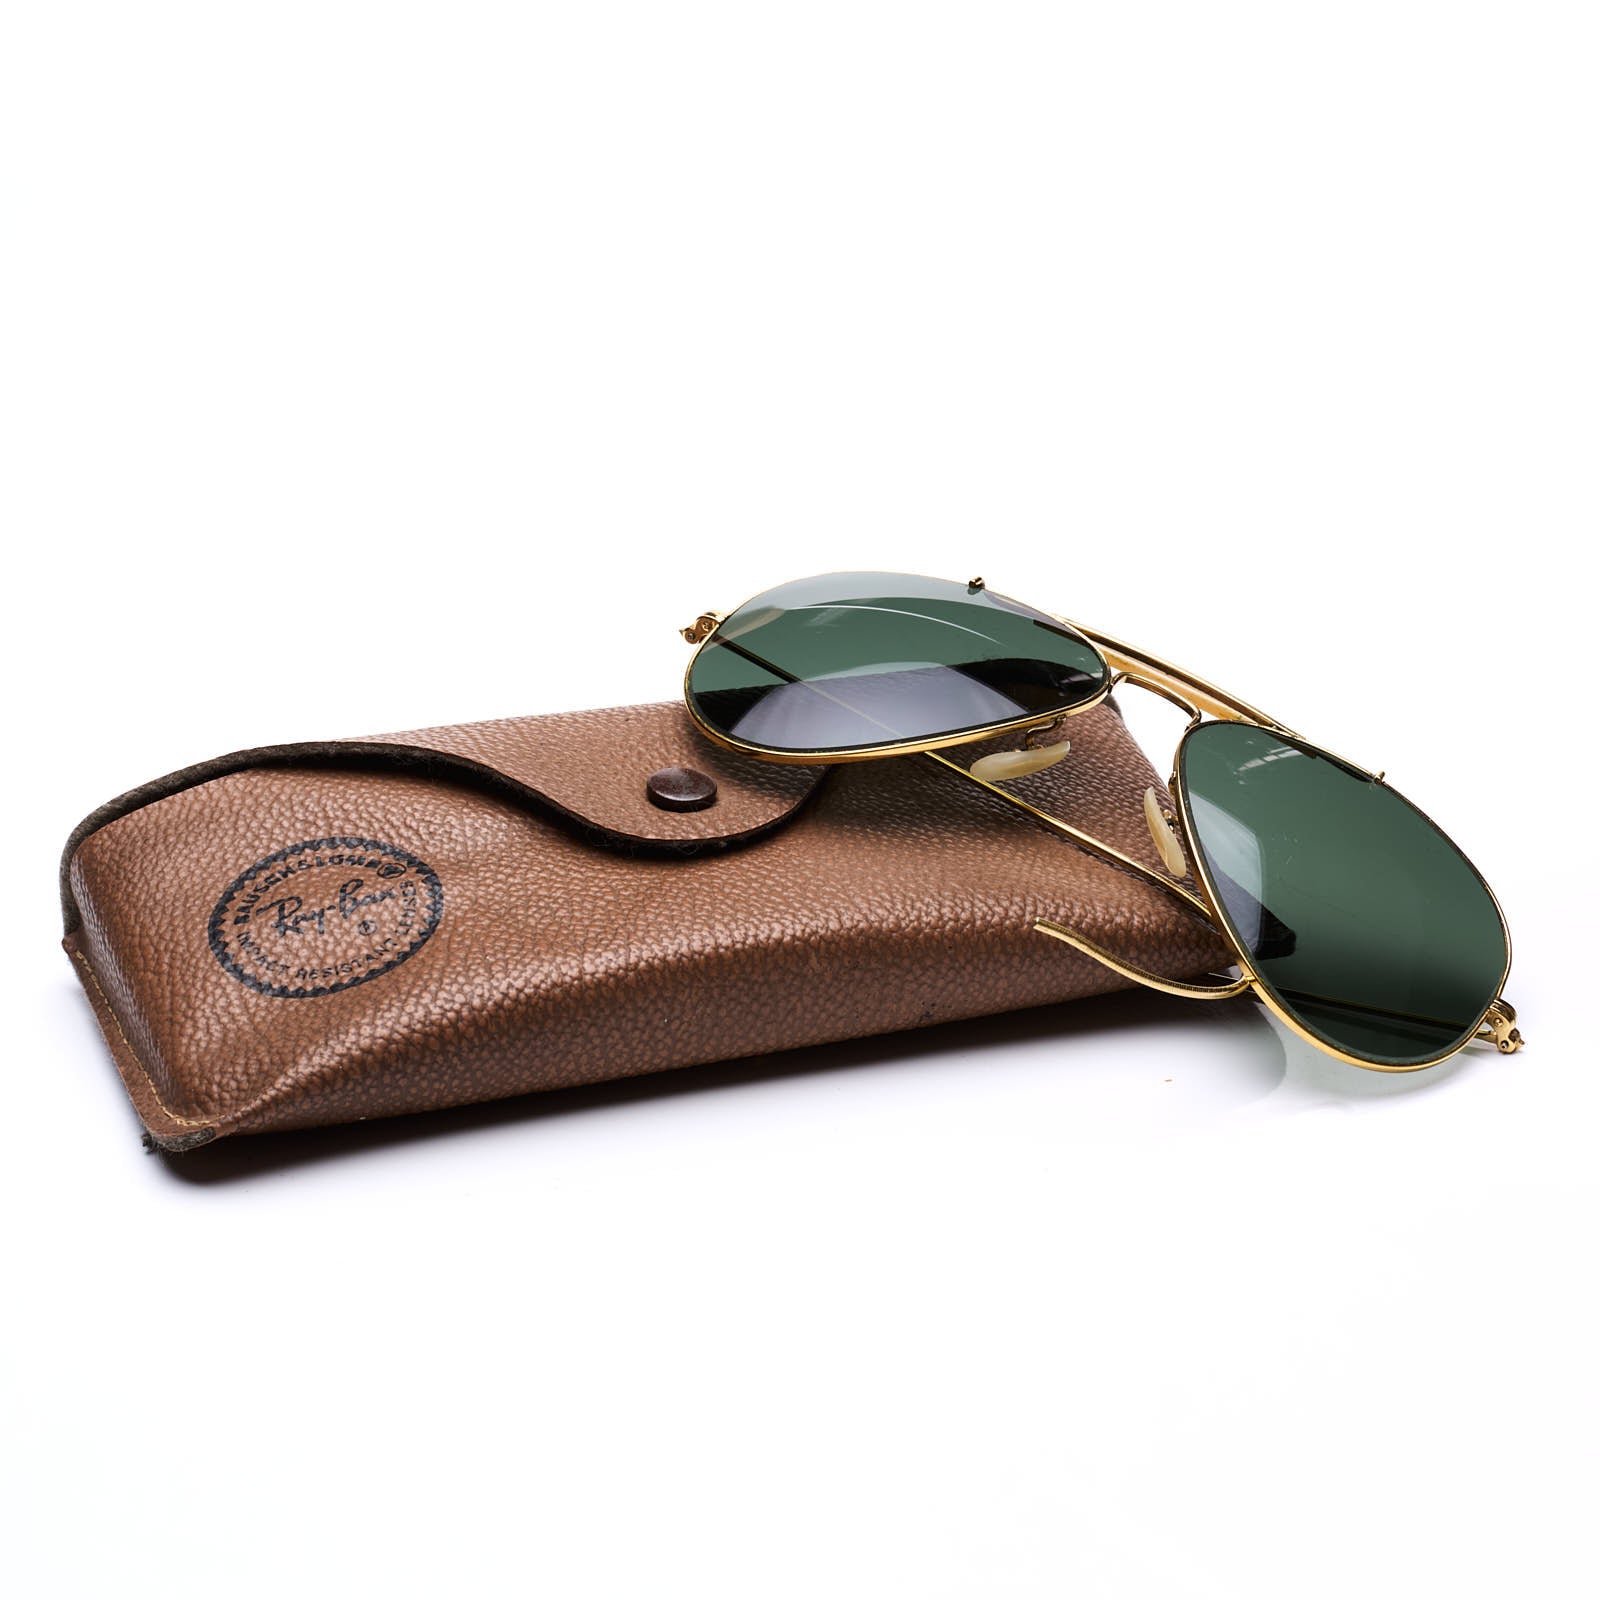 Vintage B&L RAY BAN "Outdoorsman" G15 Sunglasses 58mm 1960's